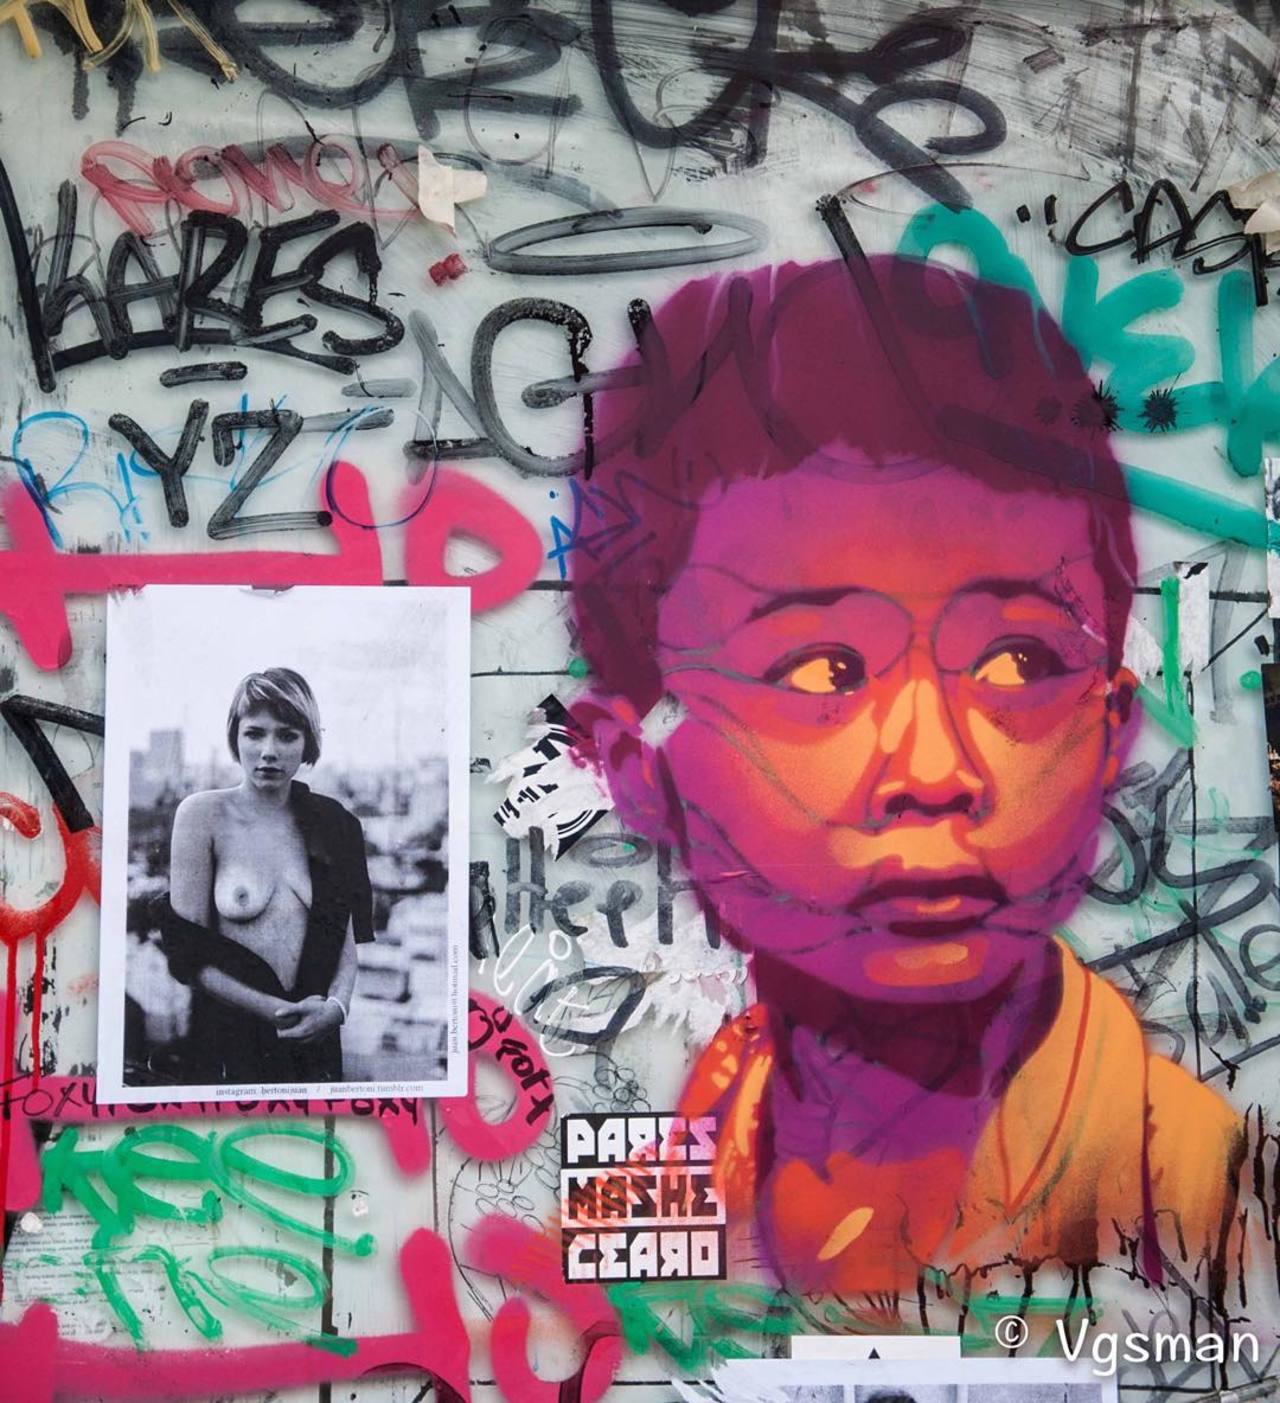 #Paris #graffiti photo by @vgsman http://ift.tt/1L1HbUh #StreetArt http://t.co/5BQzE5eTq1